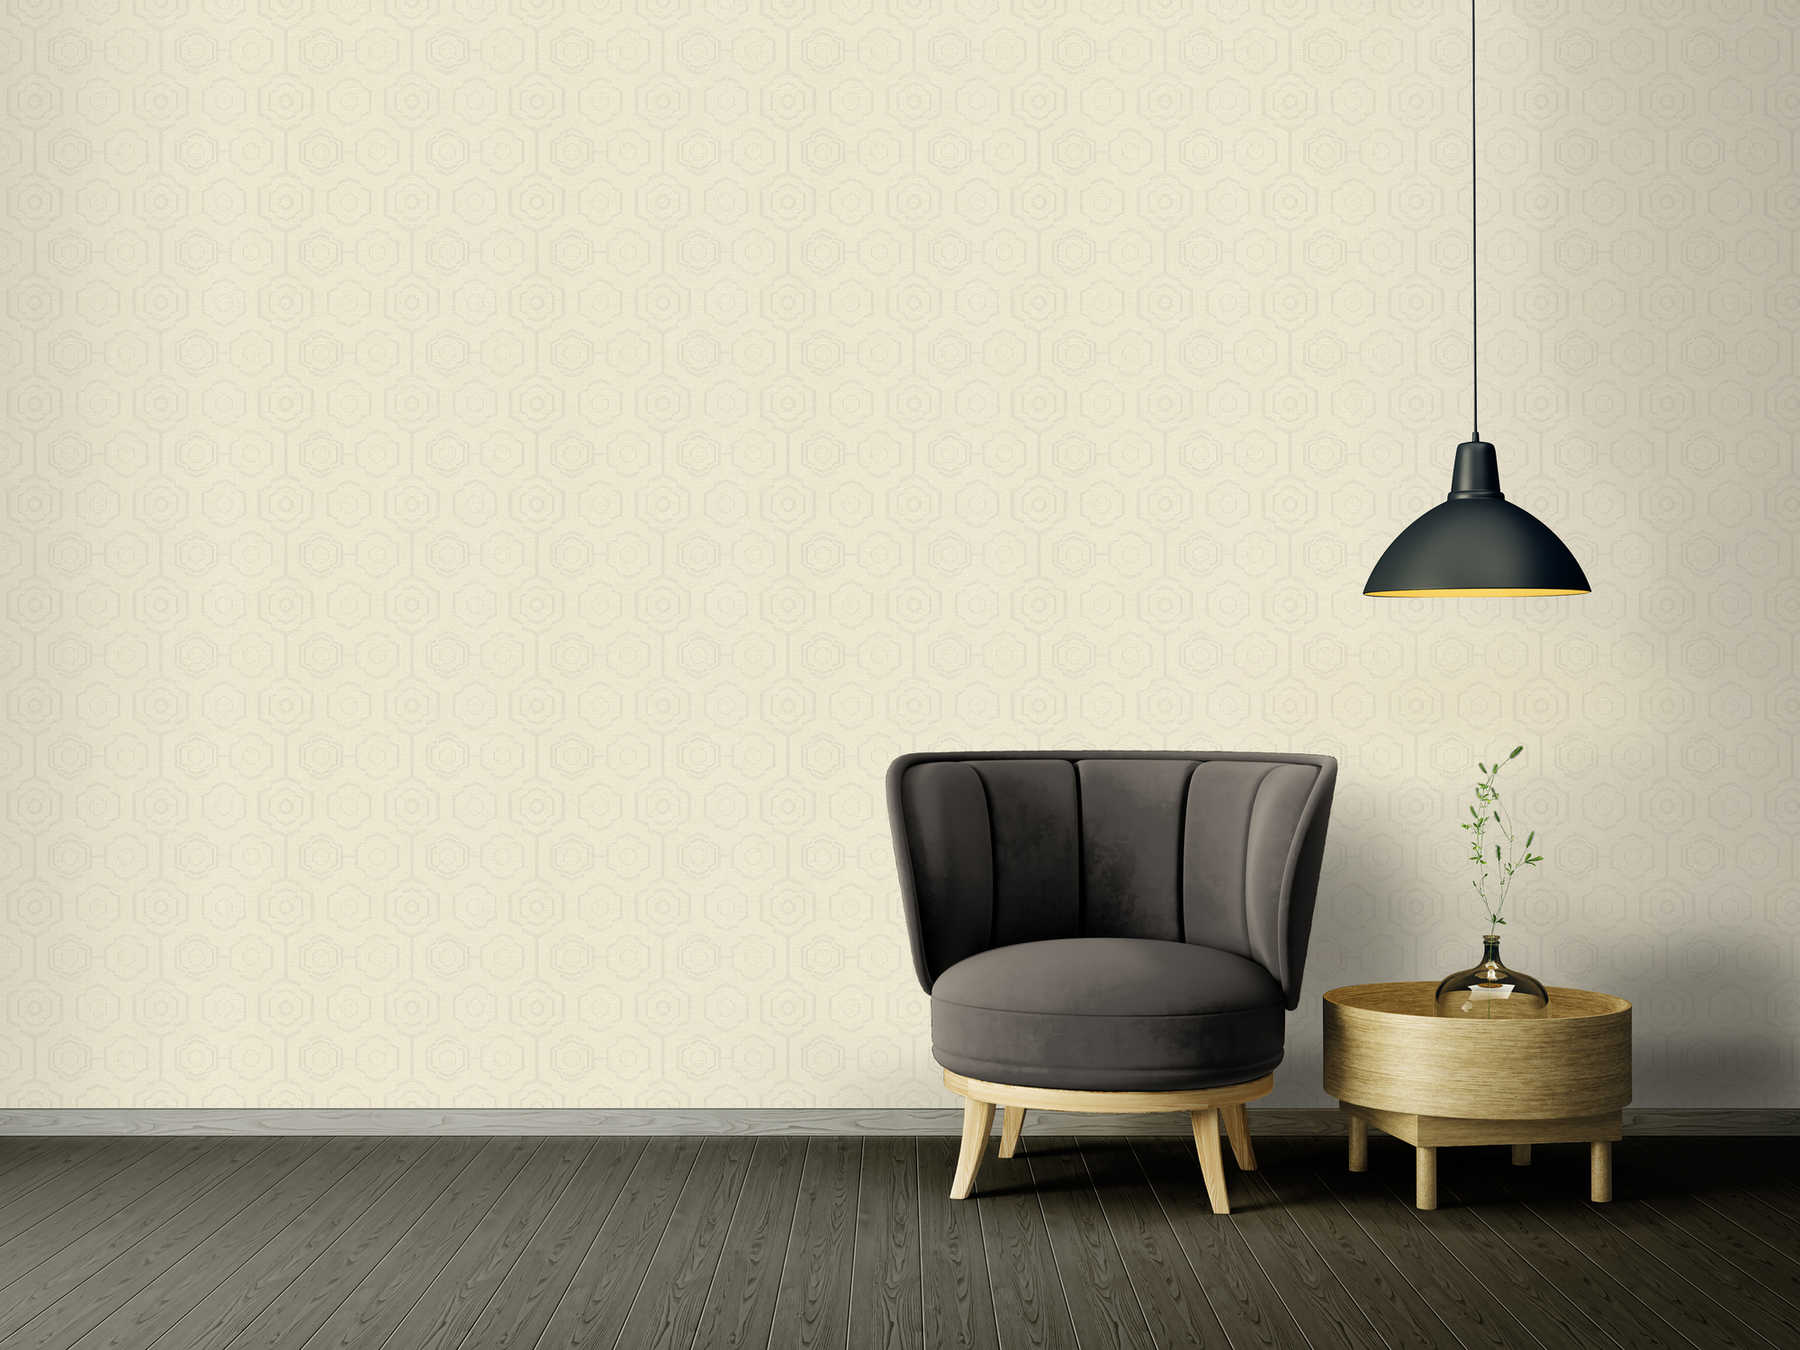             Textile optics wallpaper geometric design & gloss effect - cream, grey, beige
        